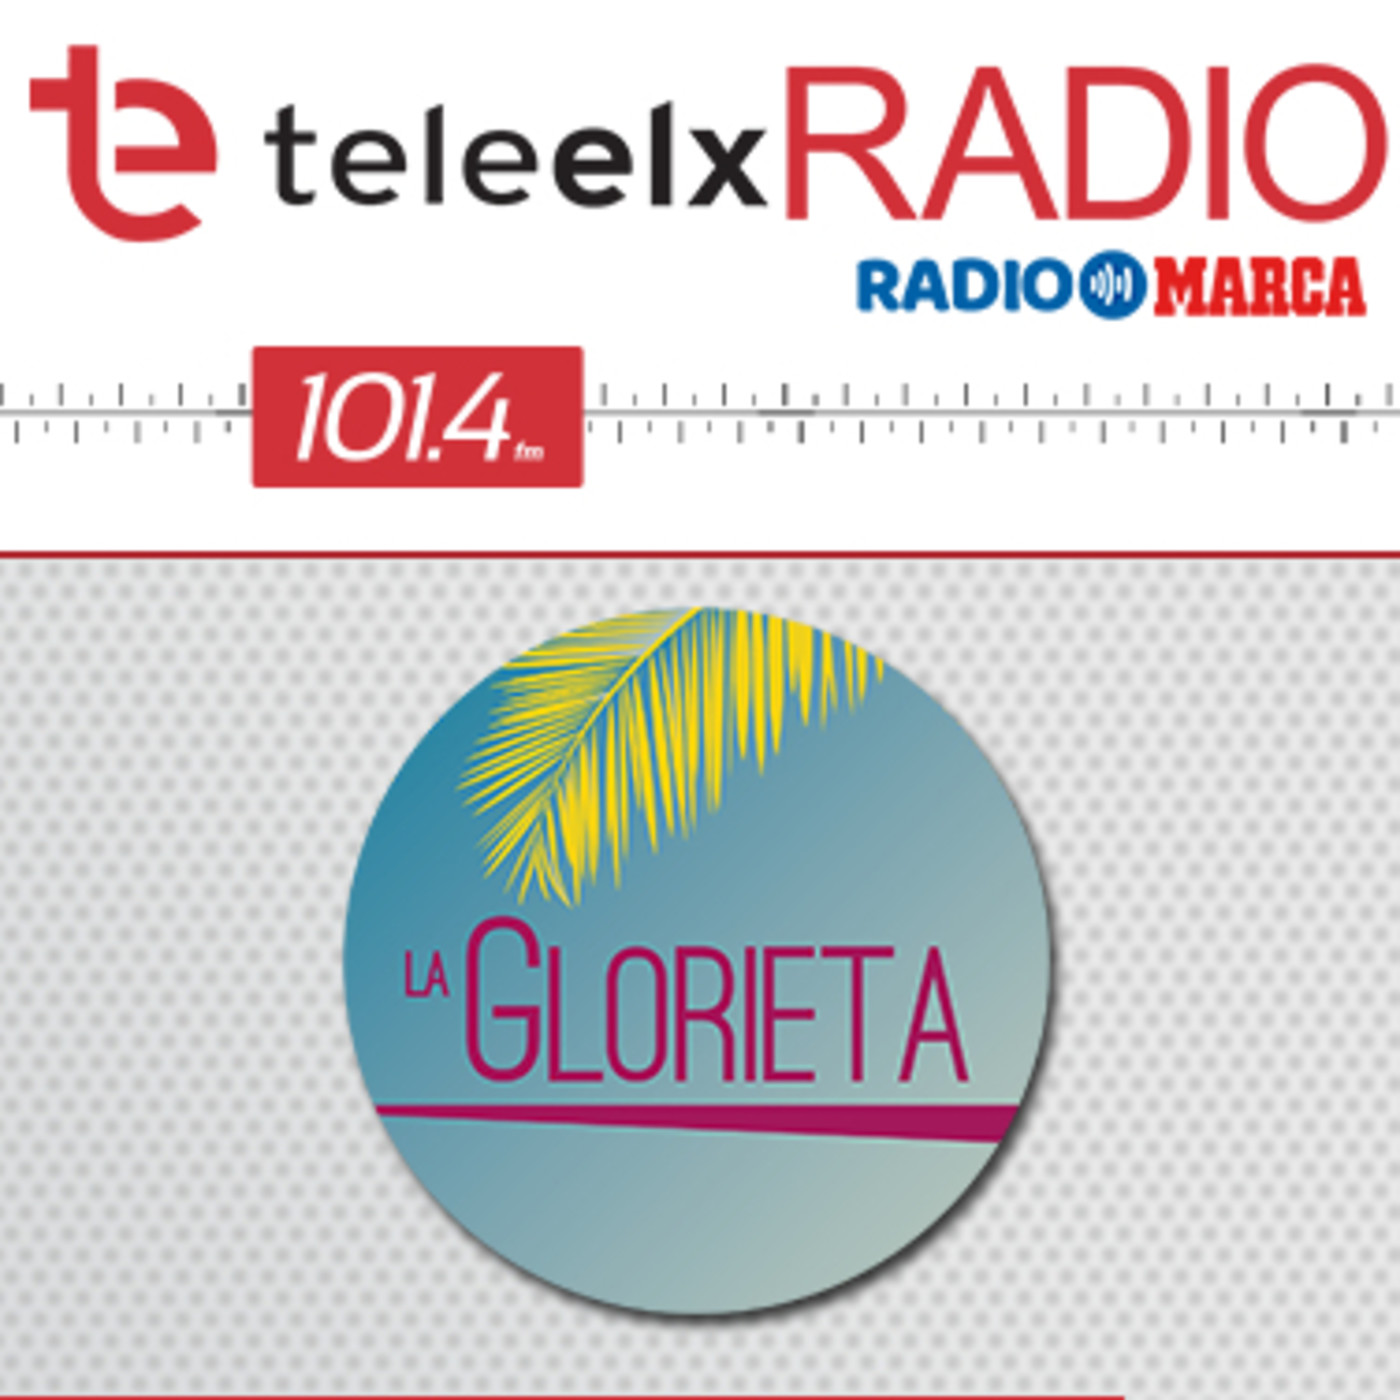 Flotar vestir instructor La Glorieta, Tele Elx Radio Marca - Podcast en iVoox